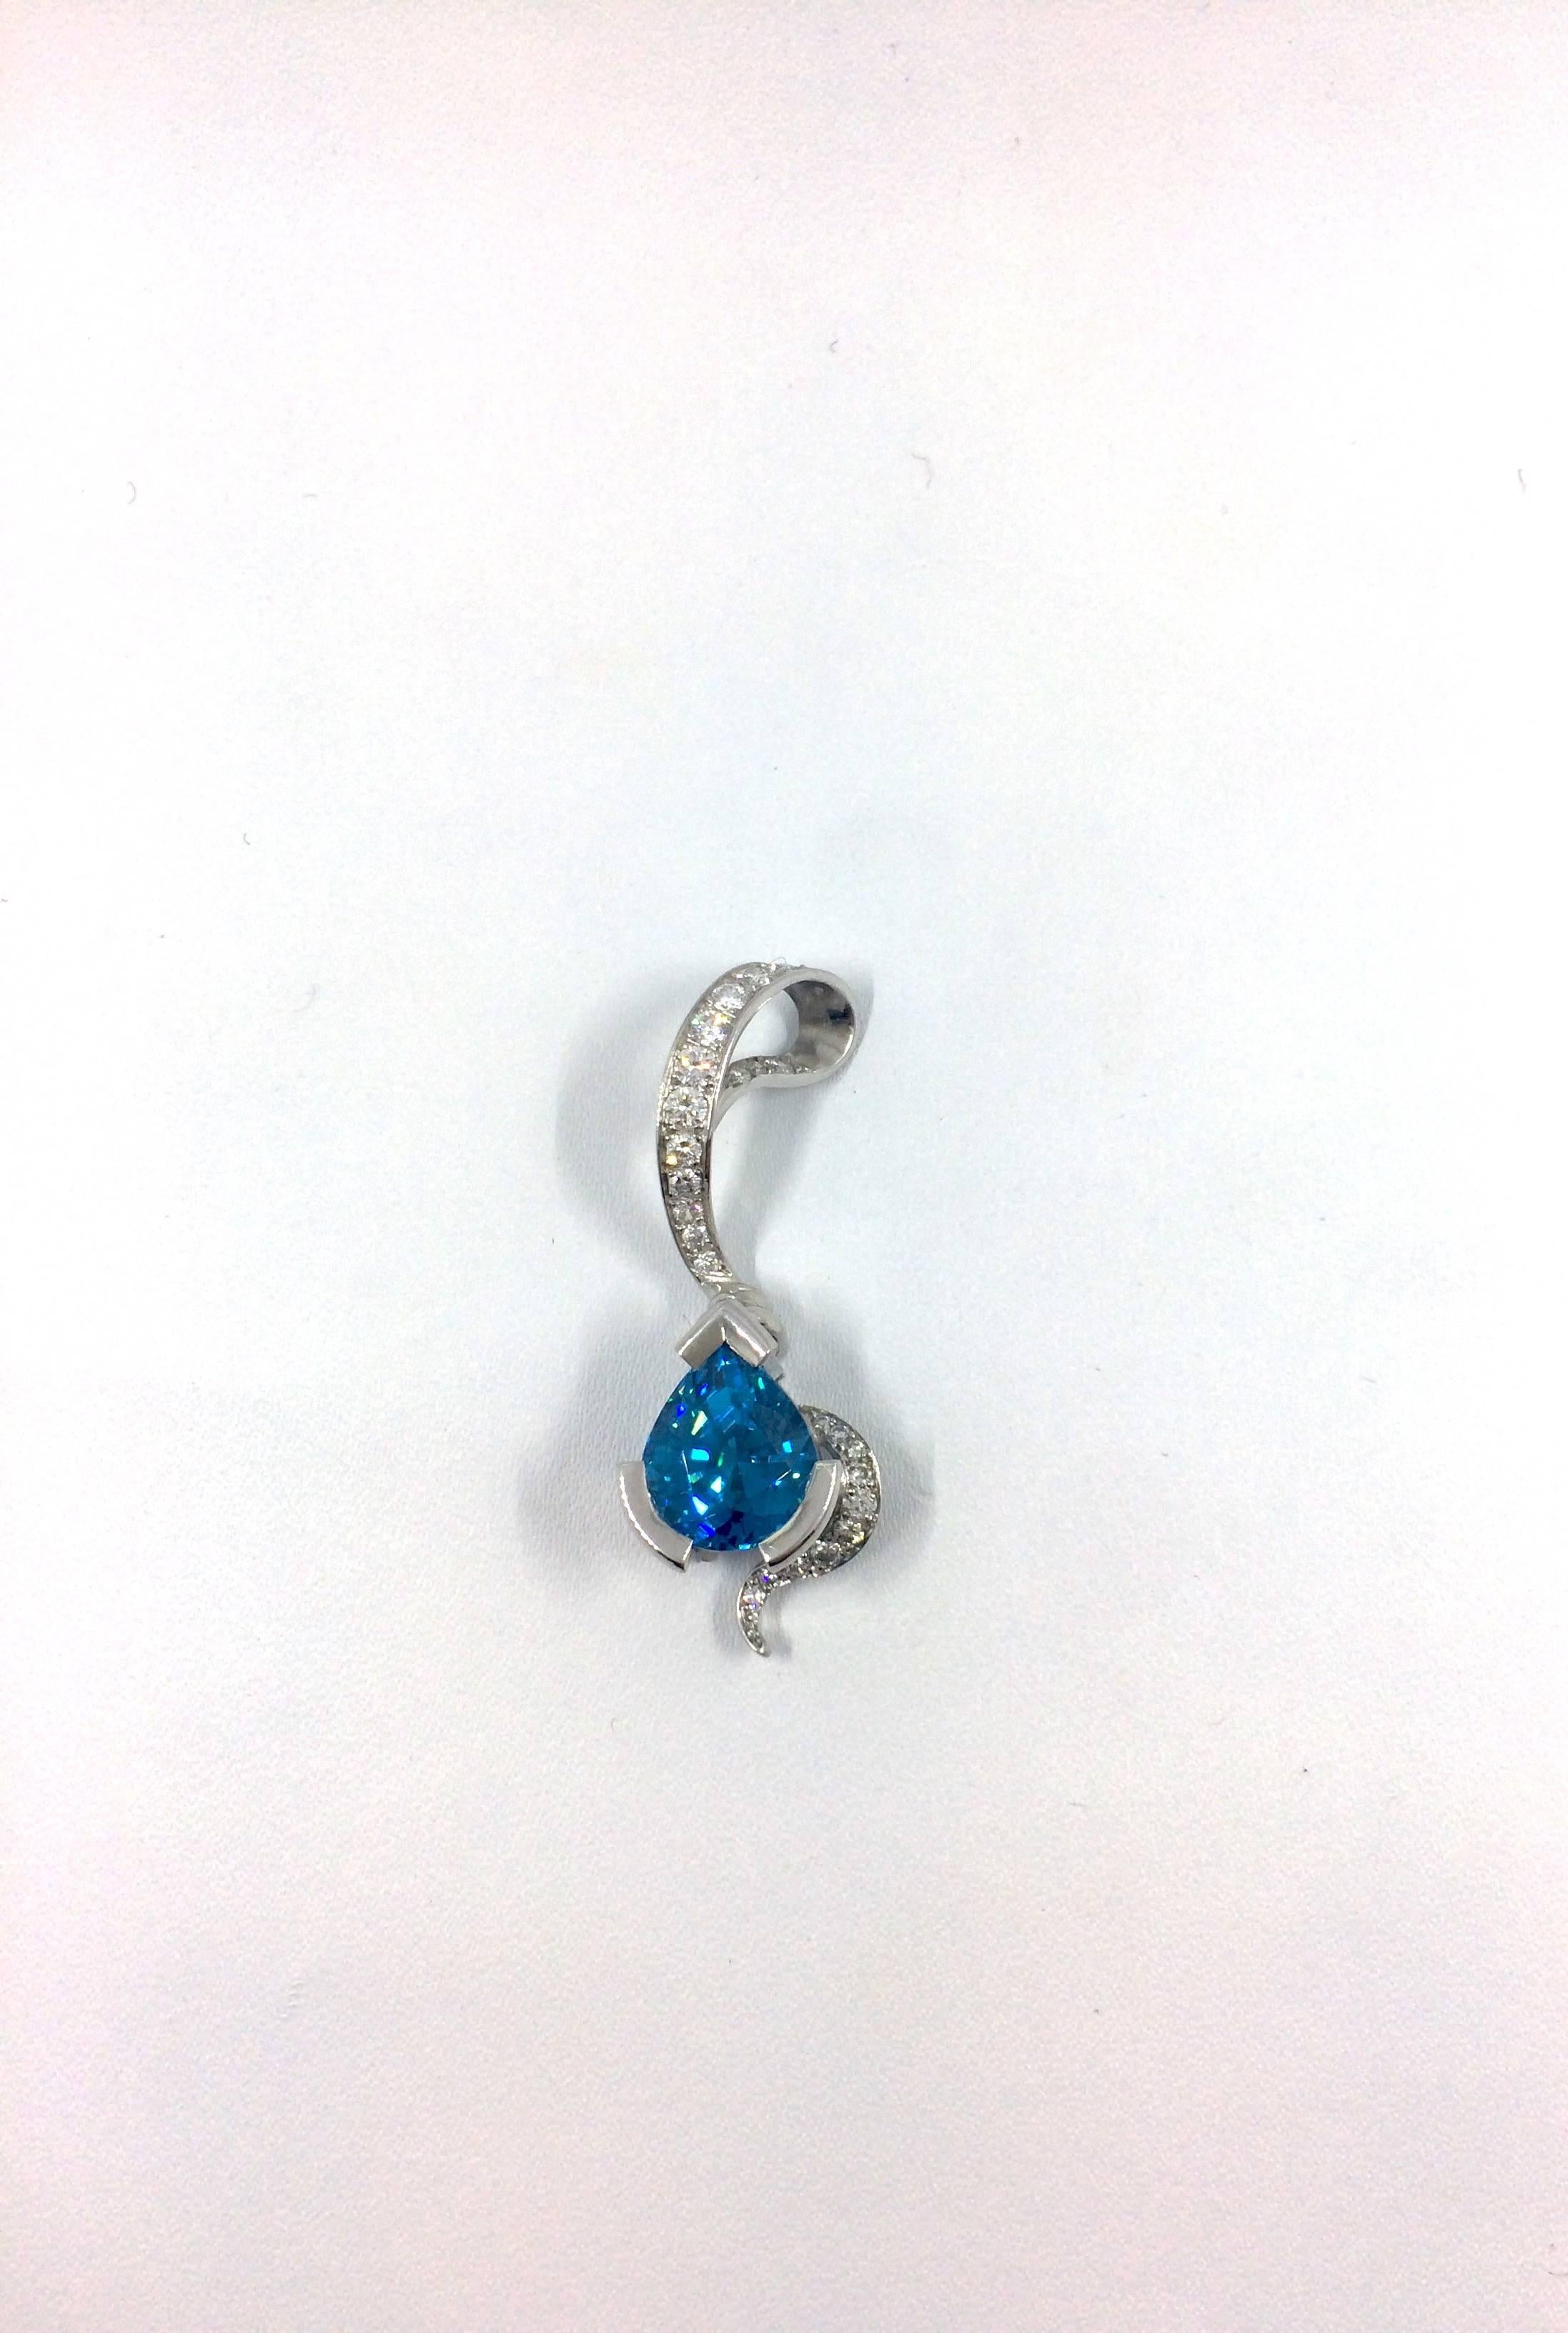 G. Minner 8.66 Carat Intense Blue Zircon Diamond Gold Pendant For Sale 5